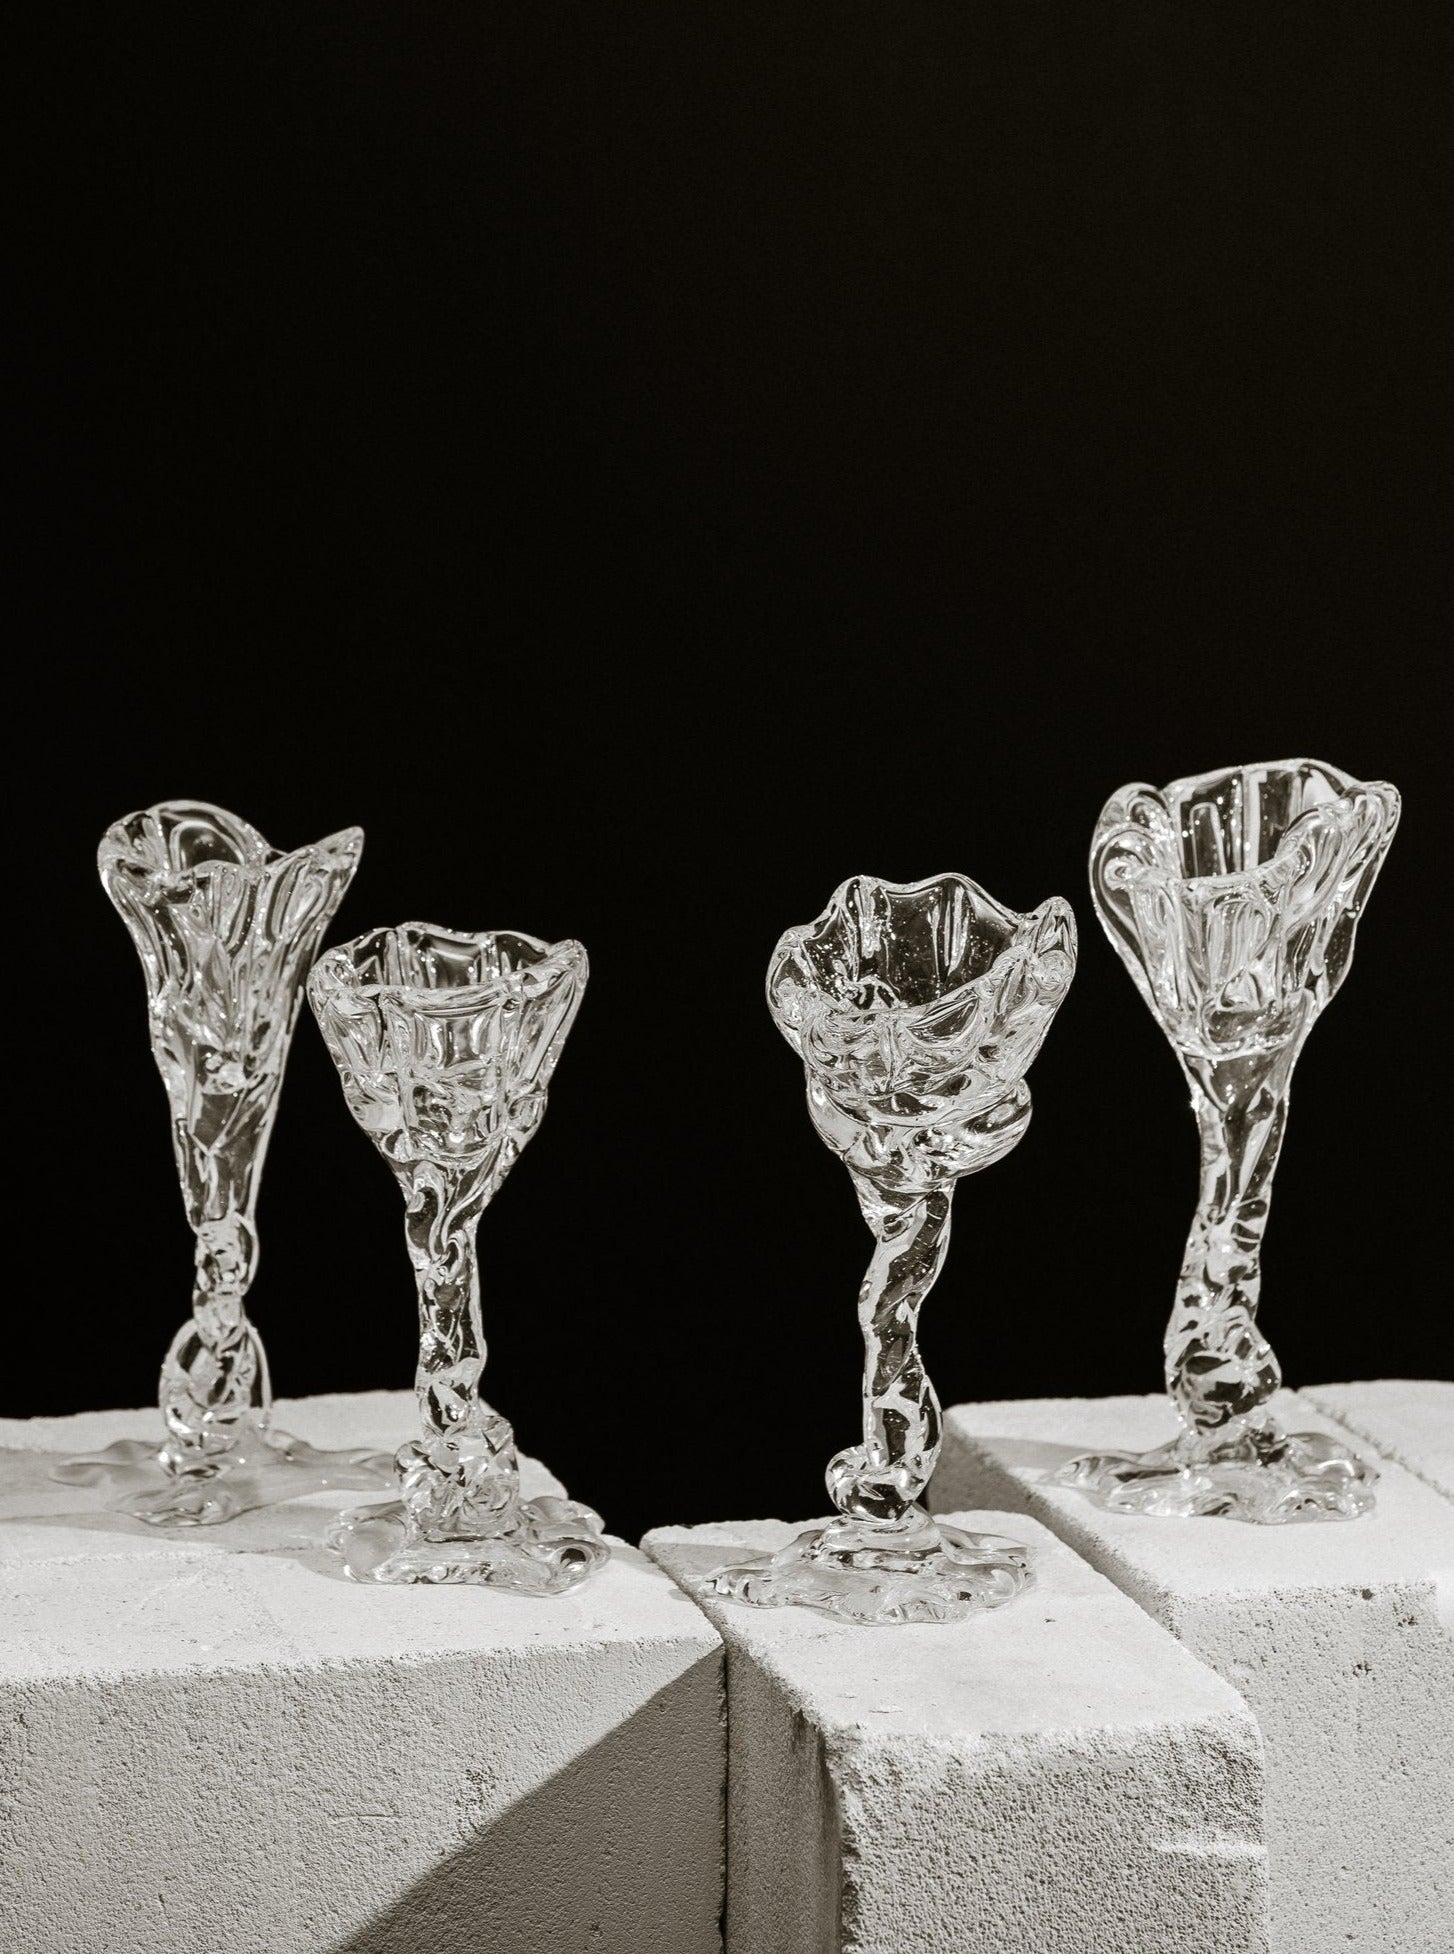 Spiky Cocktail Glass - Transparent #2